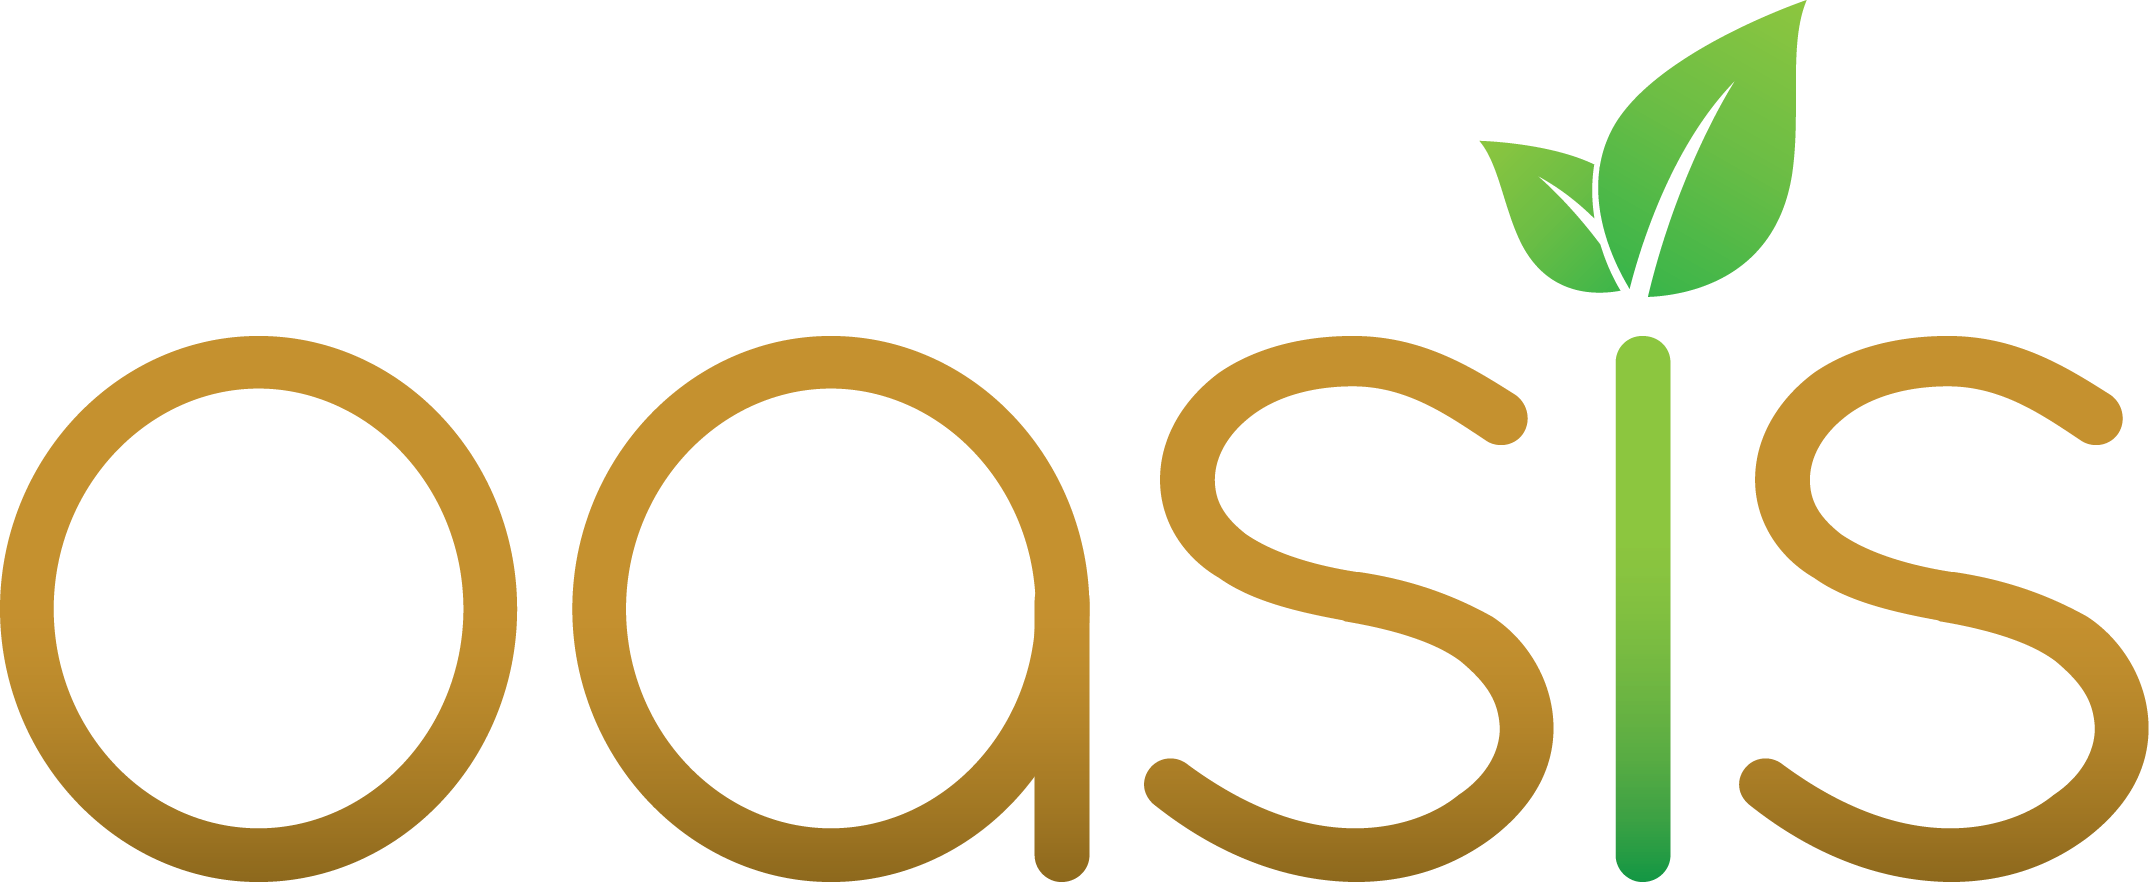 Oasis Brand Logo